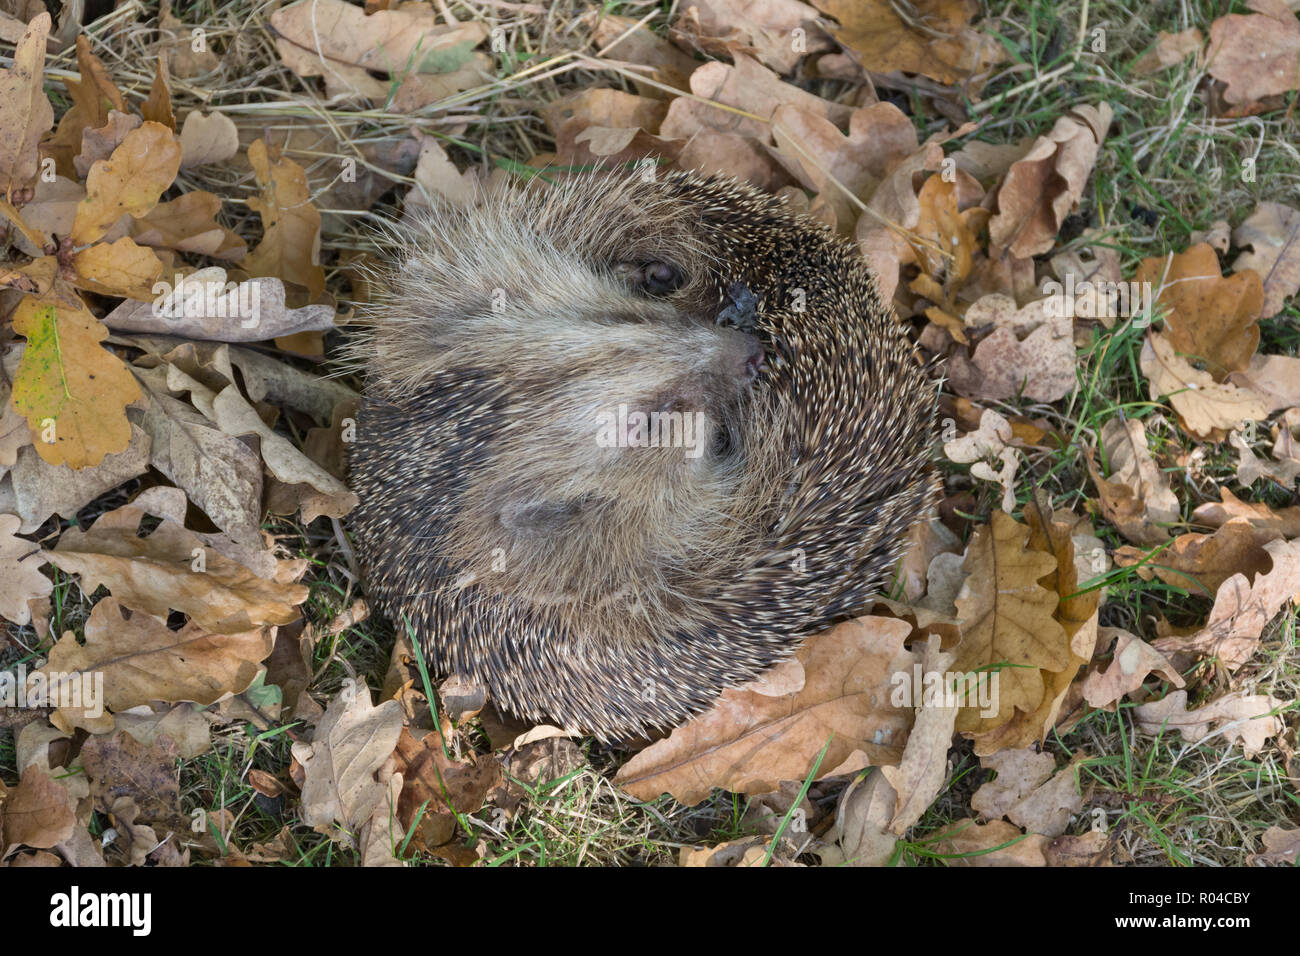 European hedgehog (Erinaceus europaeus) curled up on its back among oak leaves. Animal humour Stock Photo